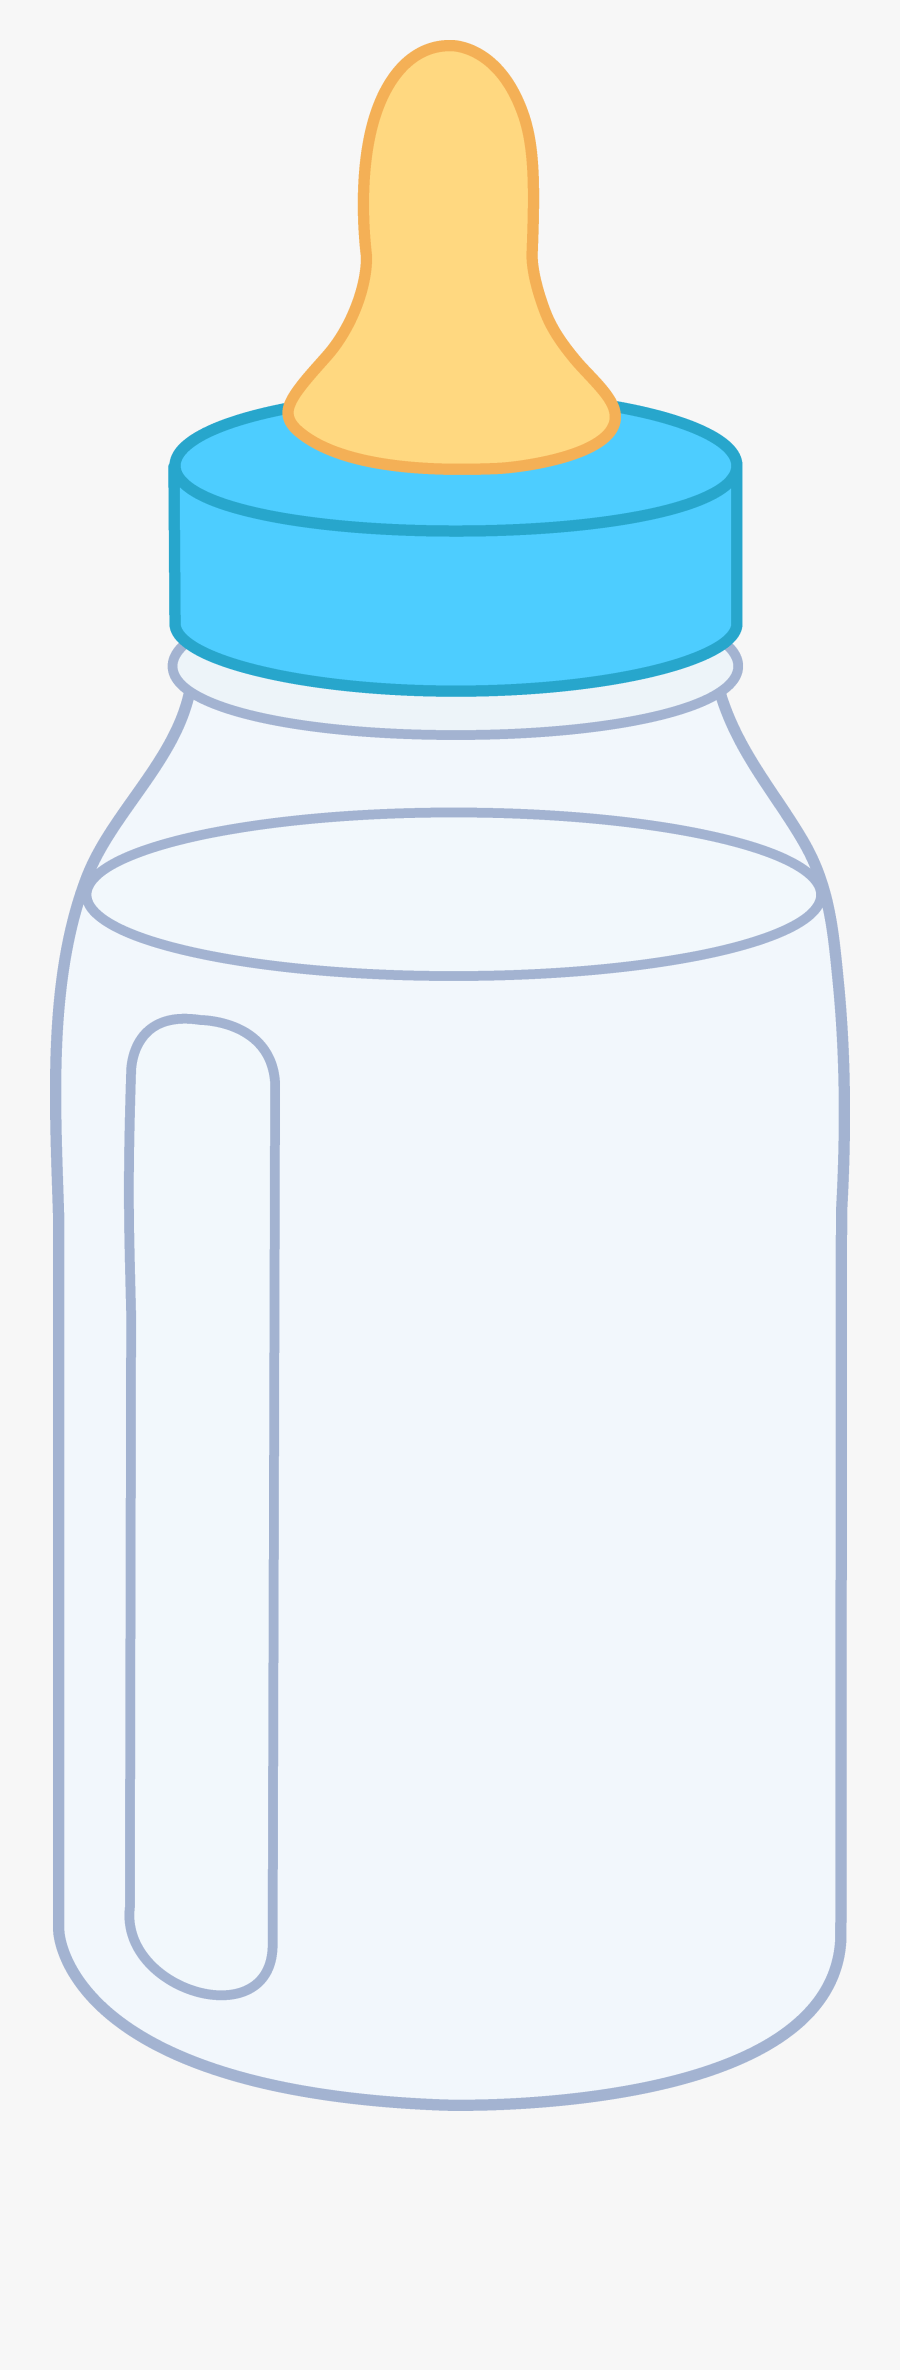 Blue Baby Bottle - Baby Bottle Of Milk Cartoon, Transparent Clipart